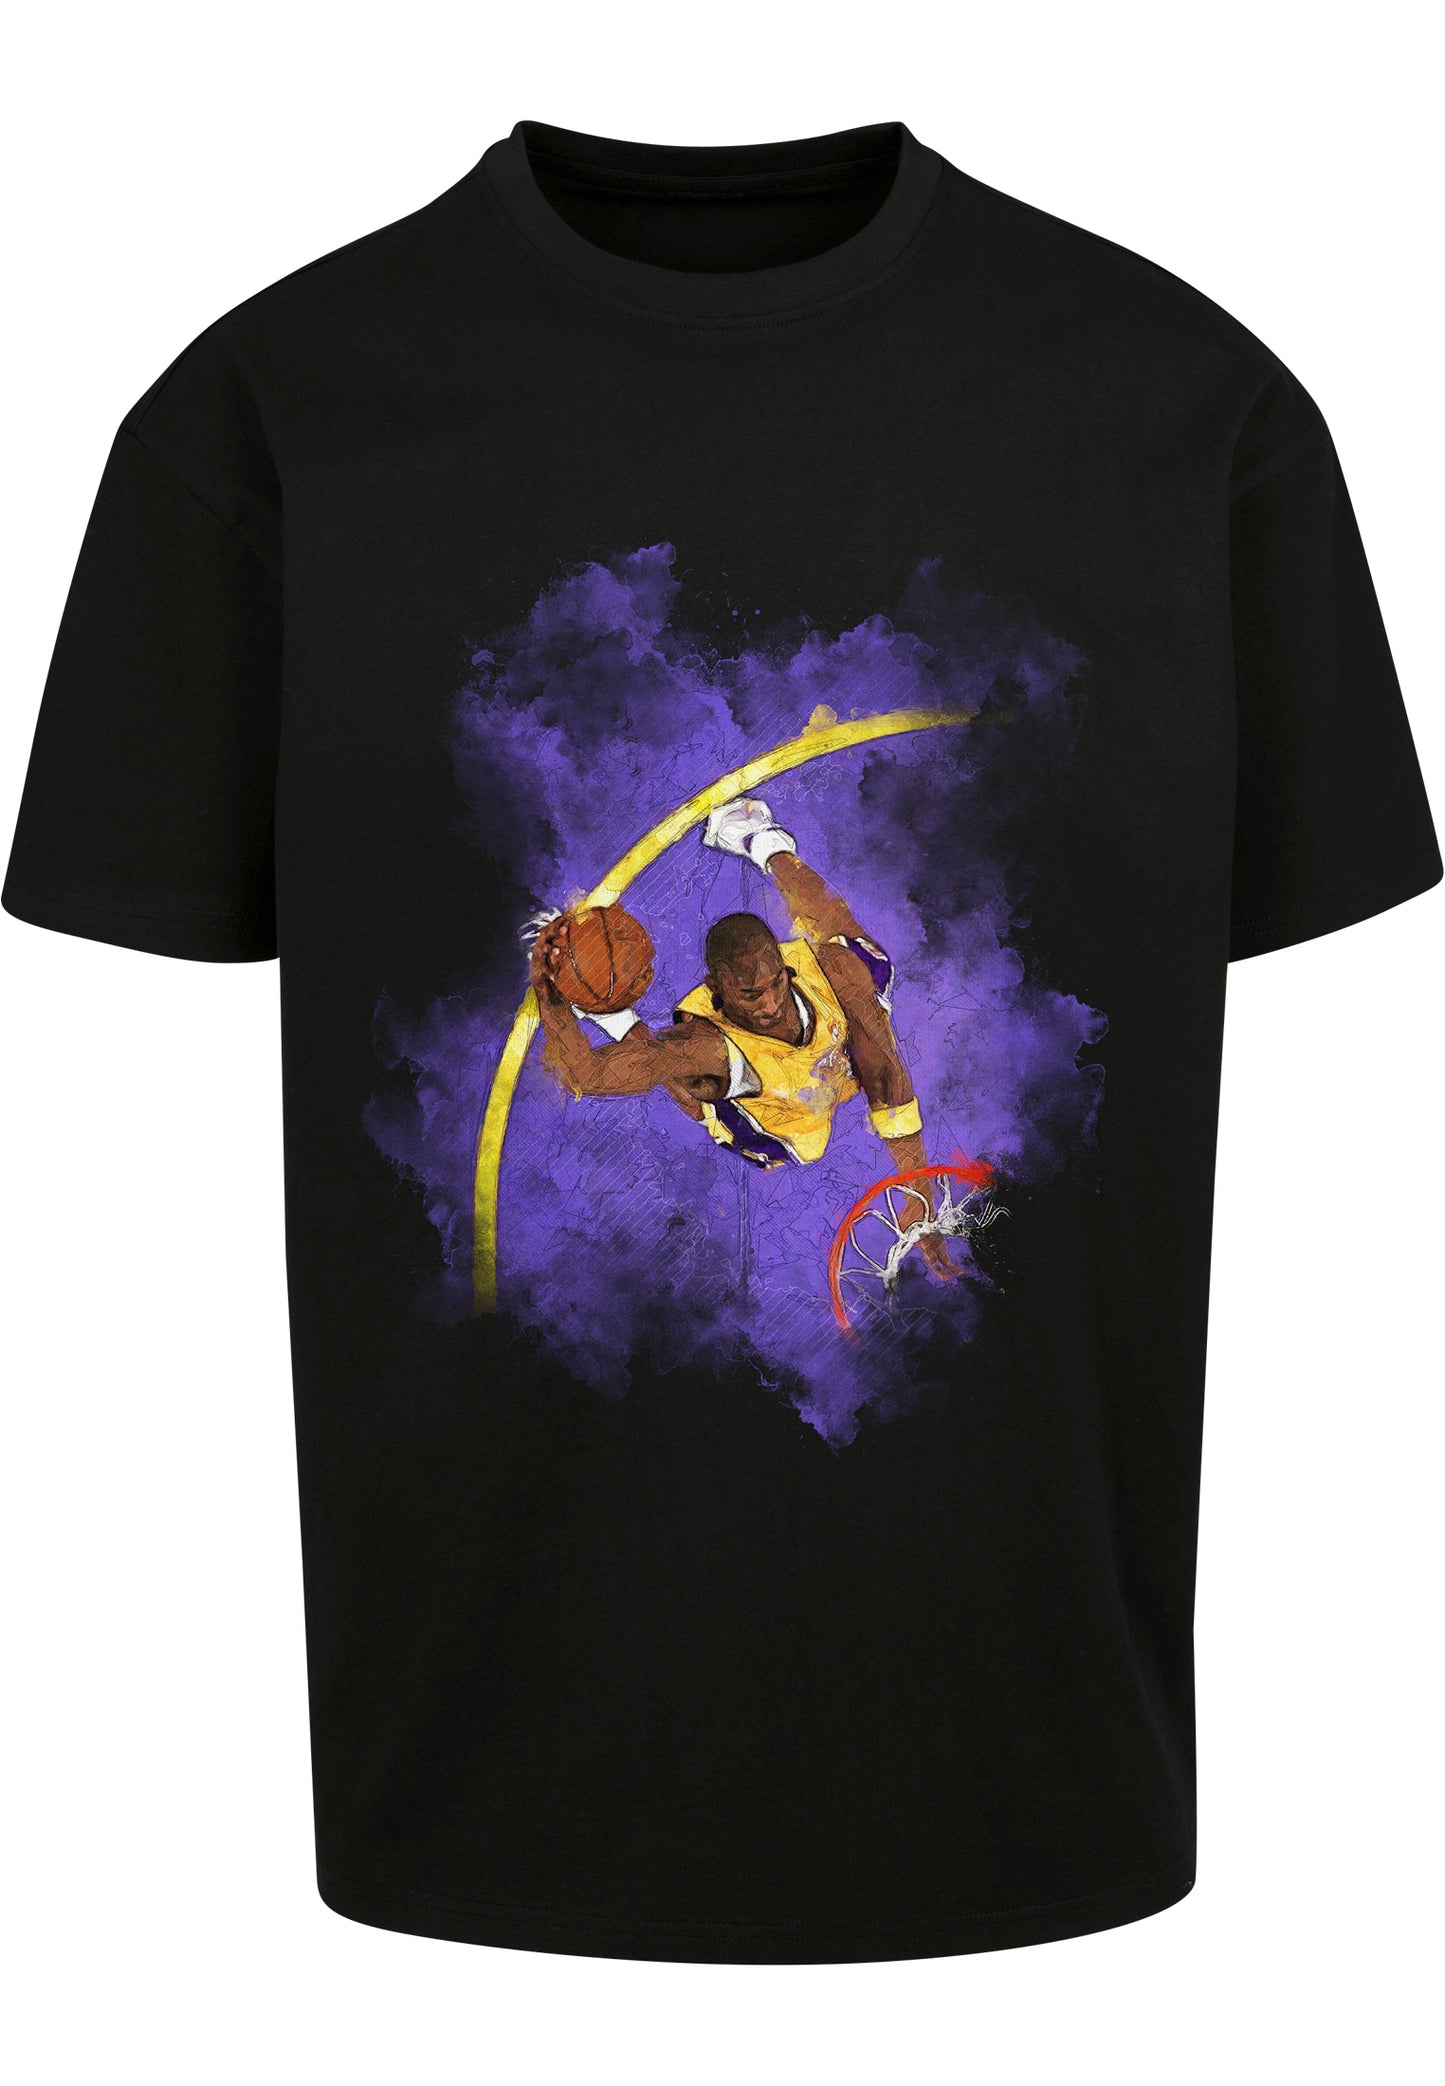 Basketball Clouds 2.0 Oversize T-Shirt Kobe Bryant Thema in Schwarz